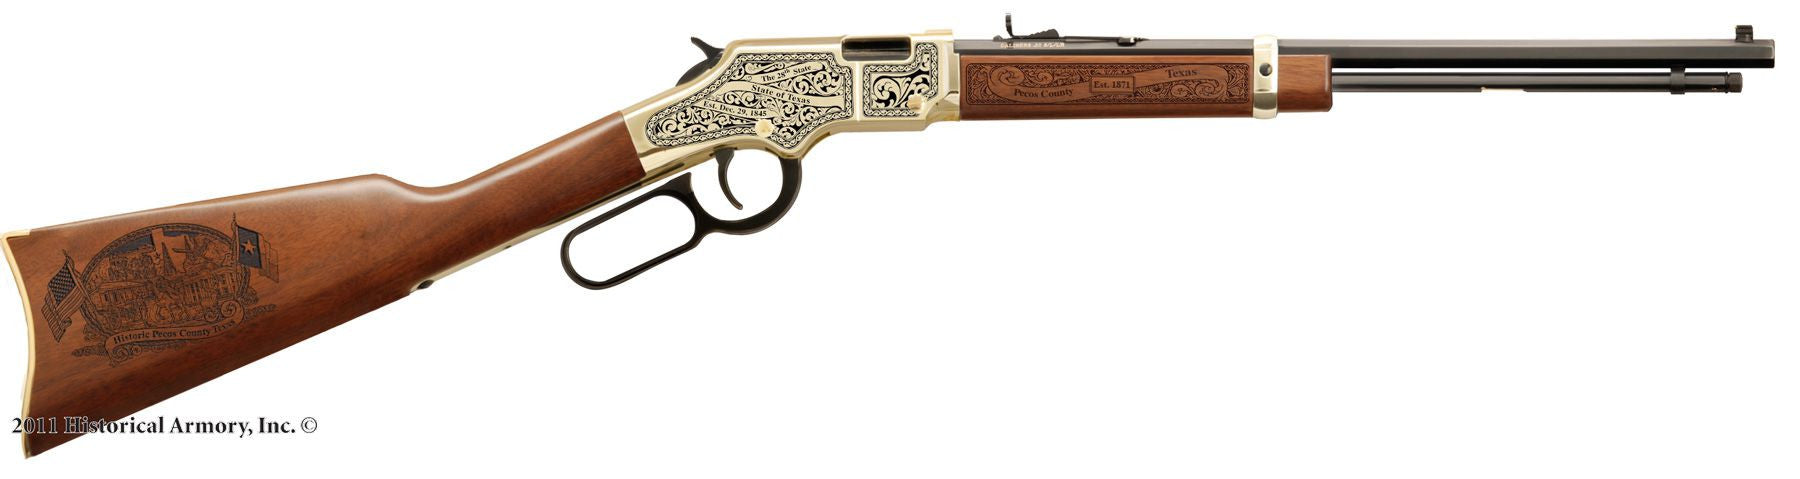 pecos county texas engraved rifle h004